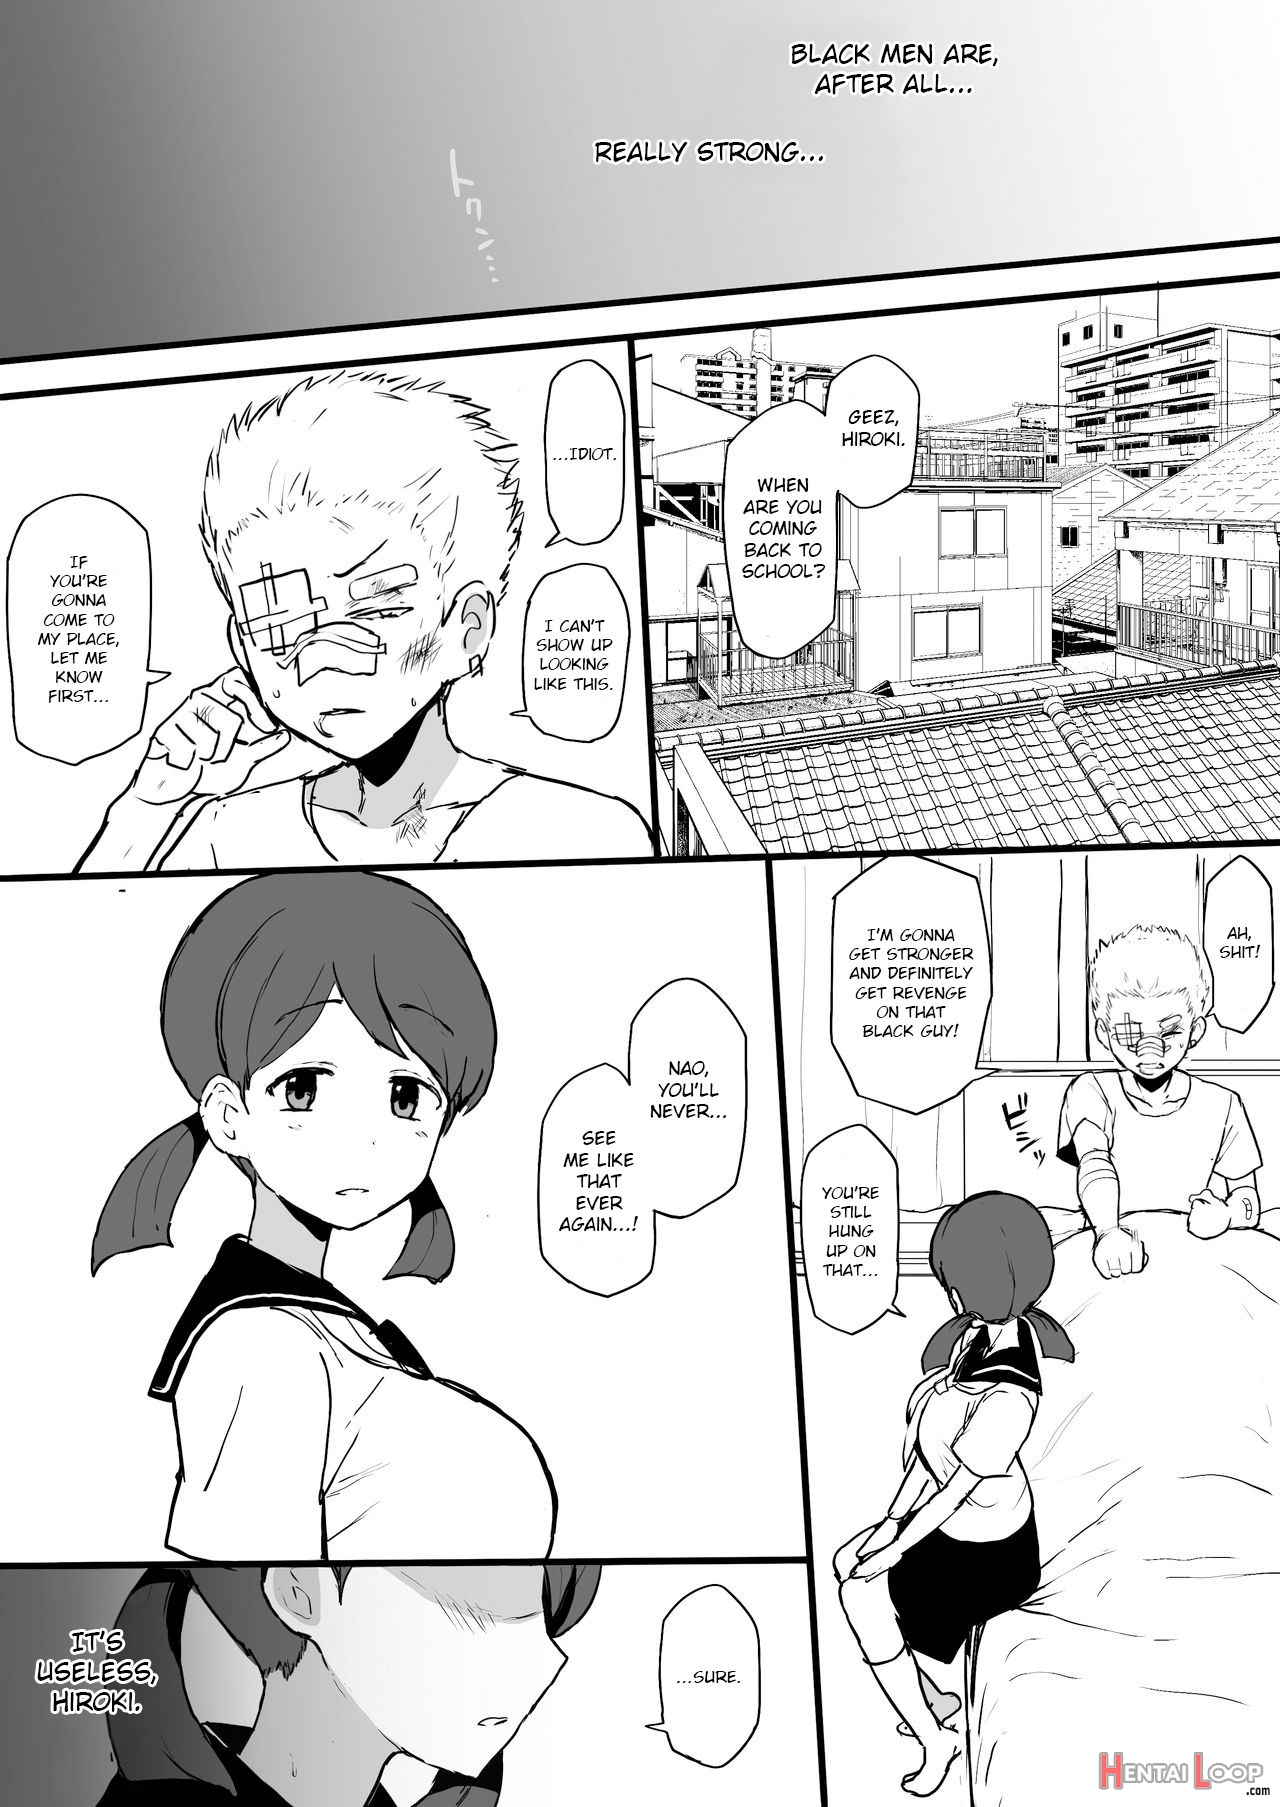 Kokujin No Tenkousei Ntr Ru Chapters 1-6 Part 1 Plus Bonus Chapter: Stolen Mother’s Breasts page 2